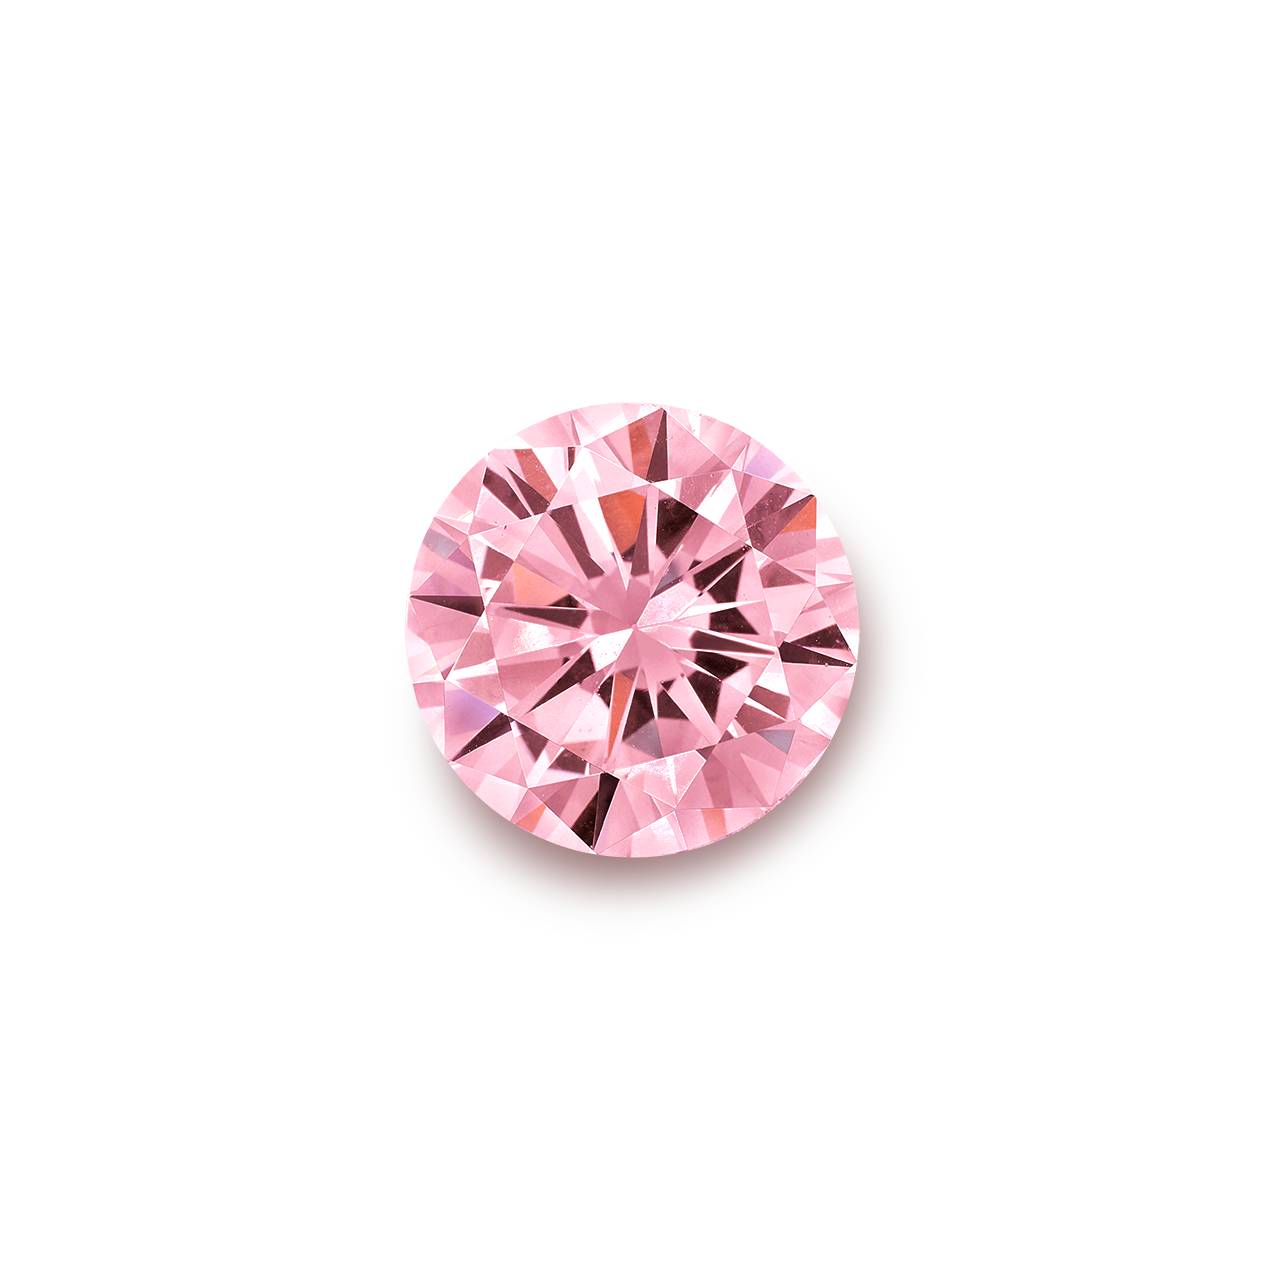 0.23克拉 阿蓋爾粉鑽裸石
Unmounted Argyle Pink Colored Diamond